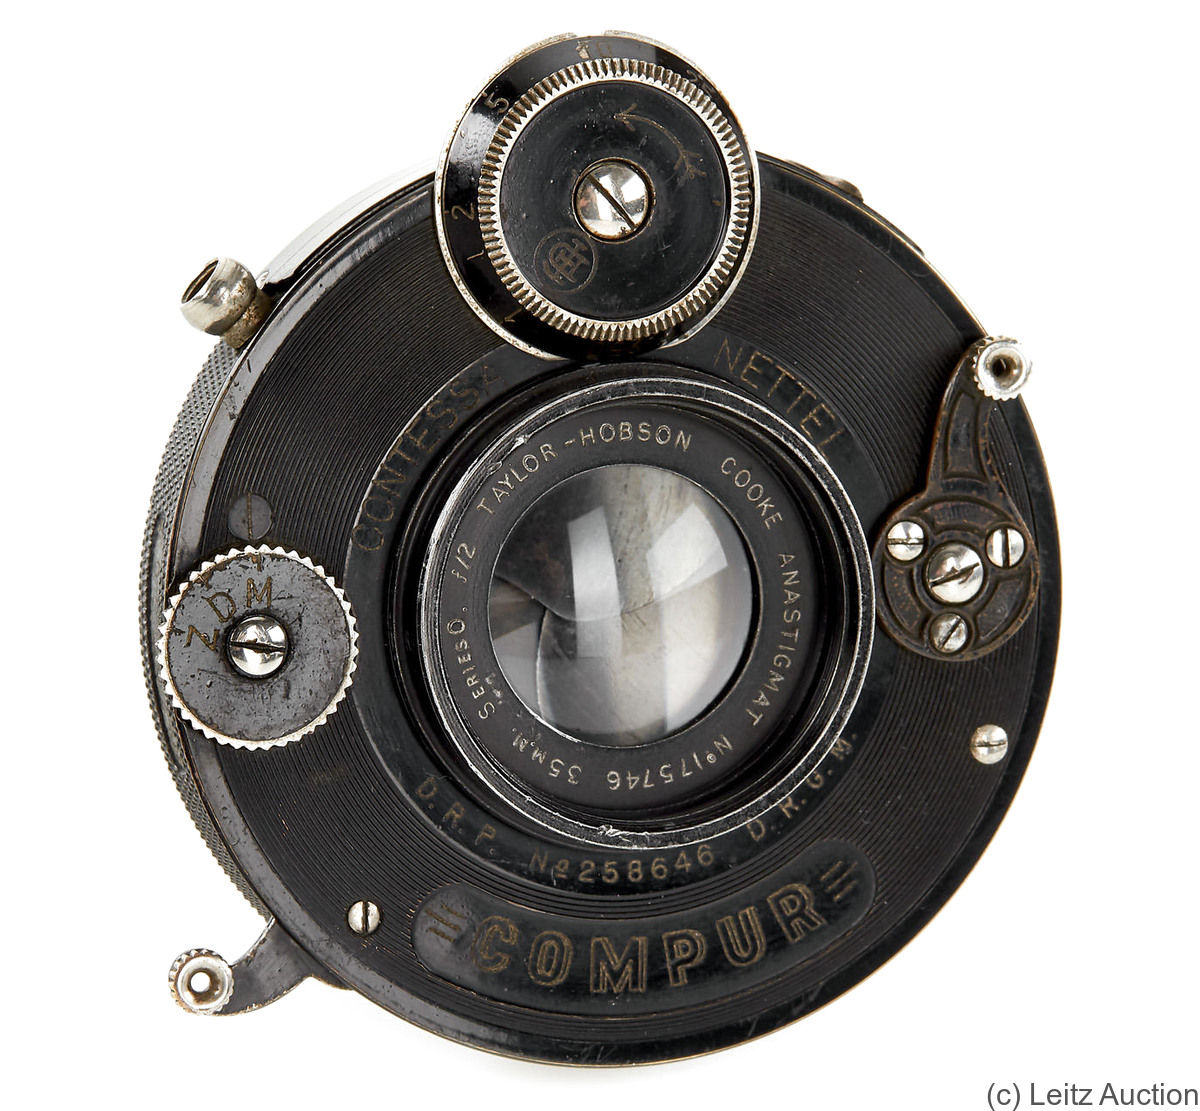 Taylor & Hobson: 35mm (3.5cm) f2 Cooke Anastigmat Series 0 (compur) camera